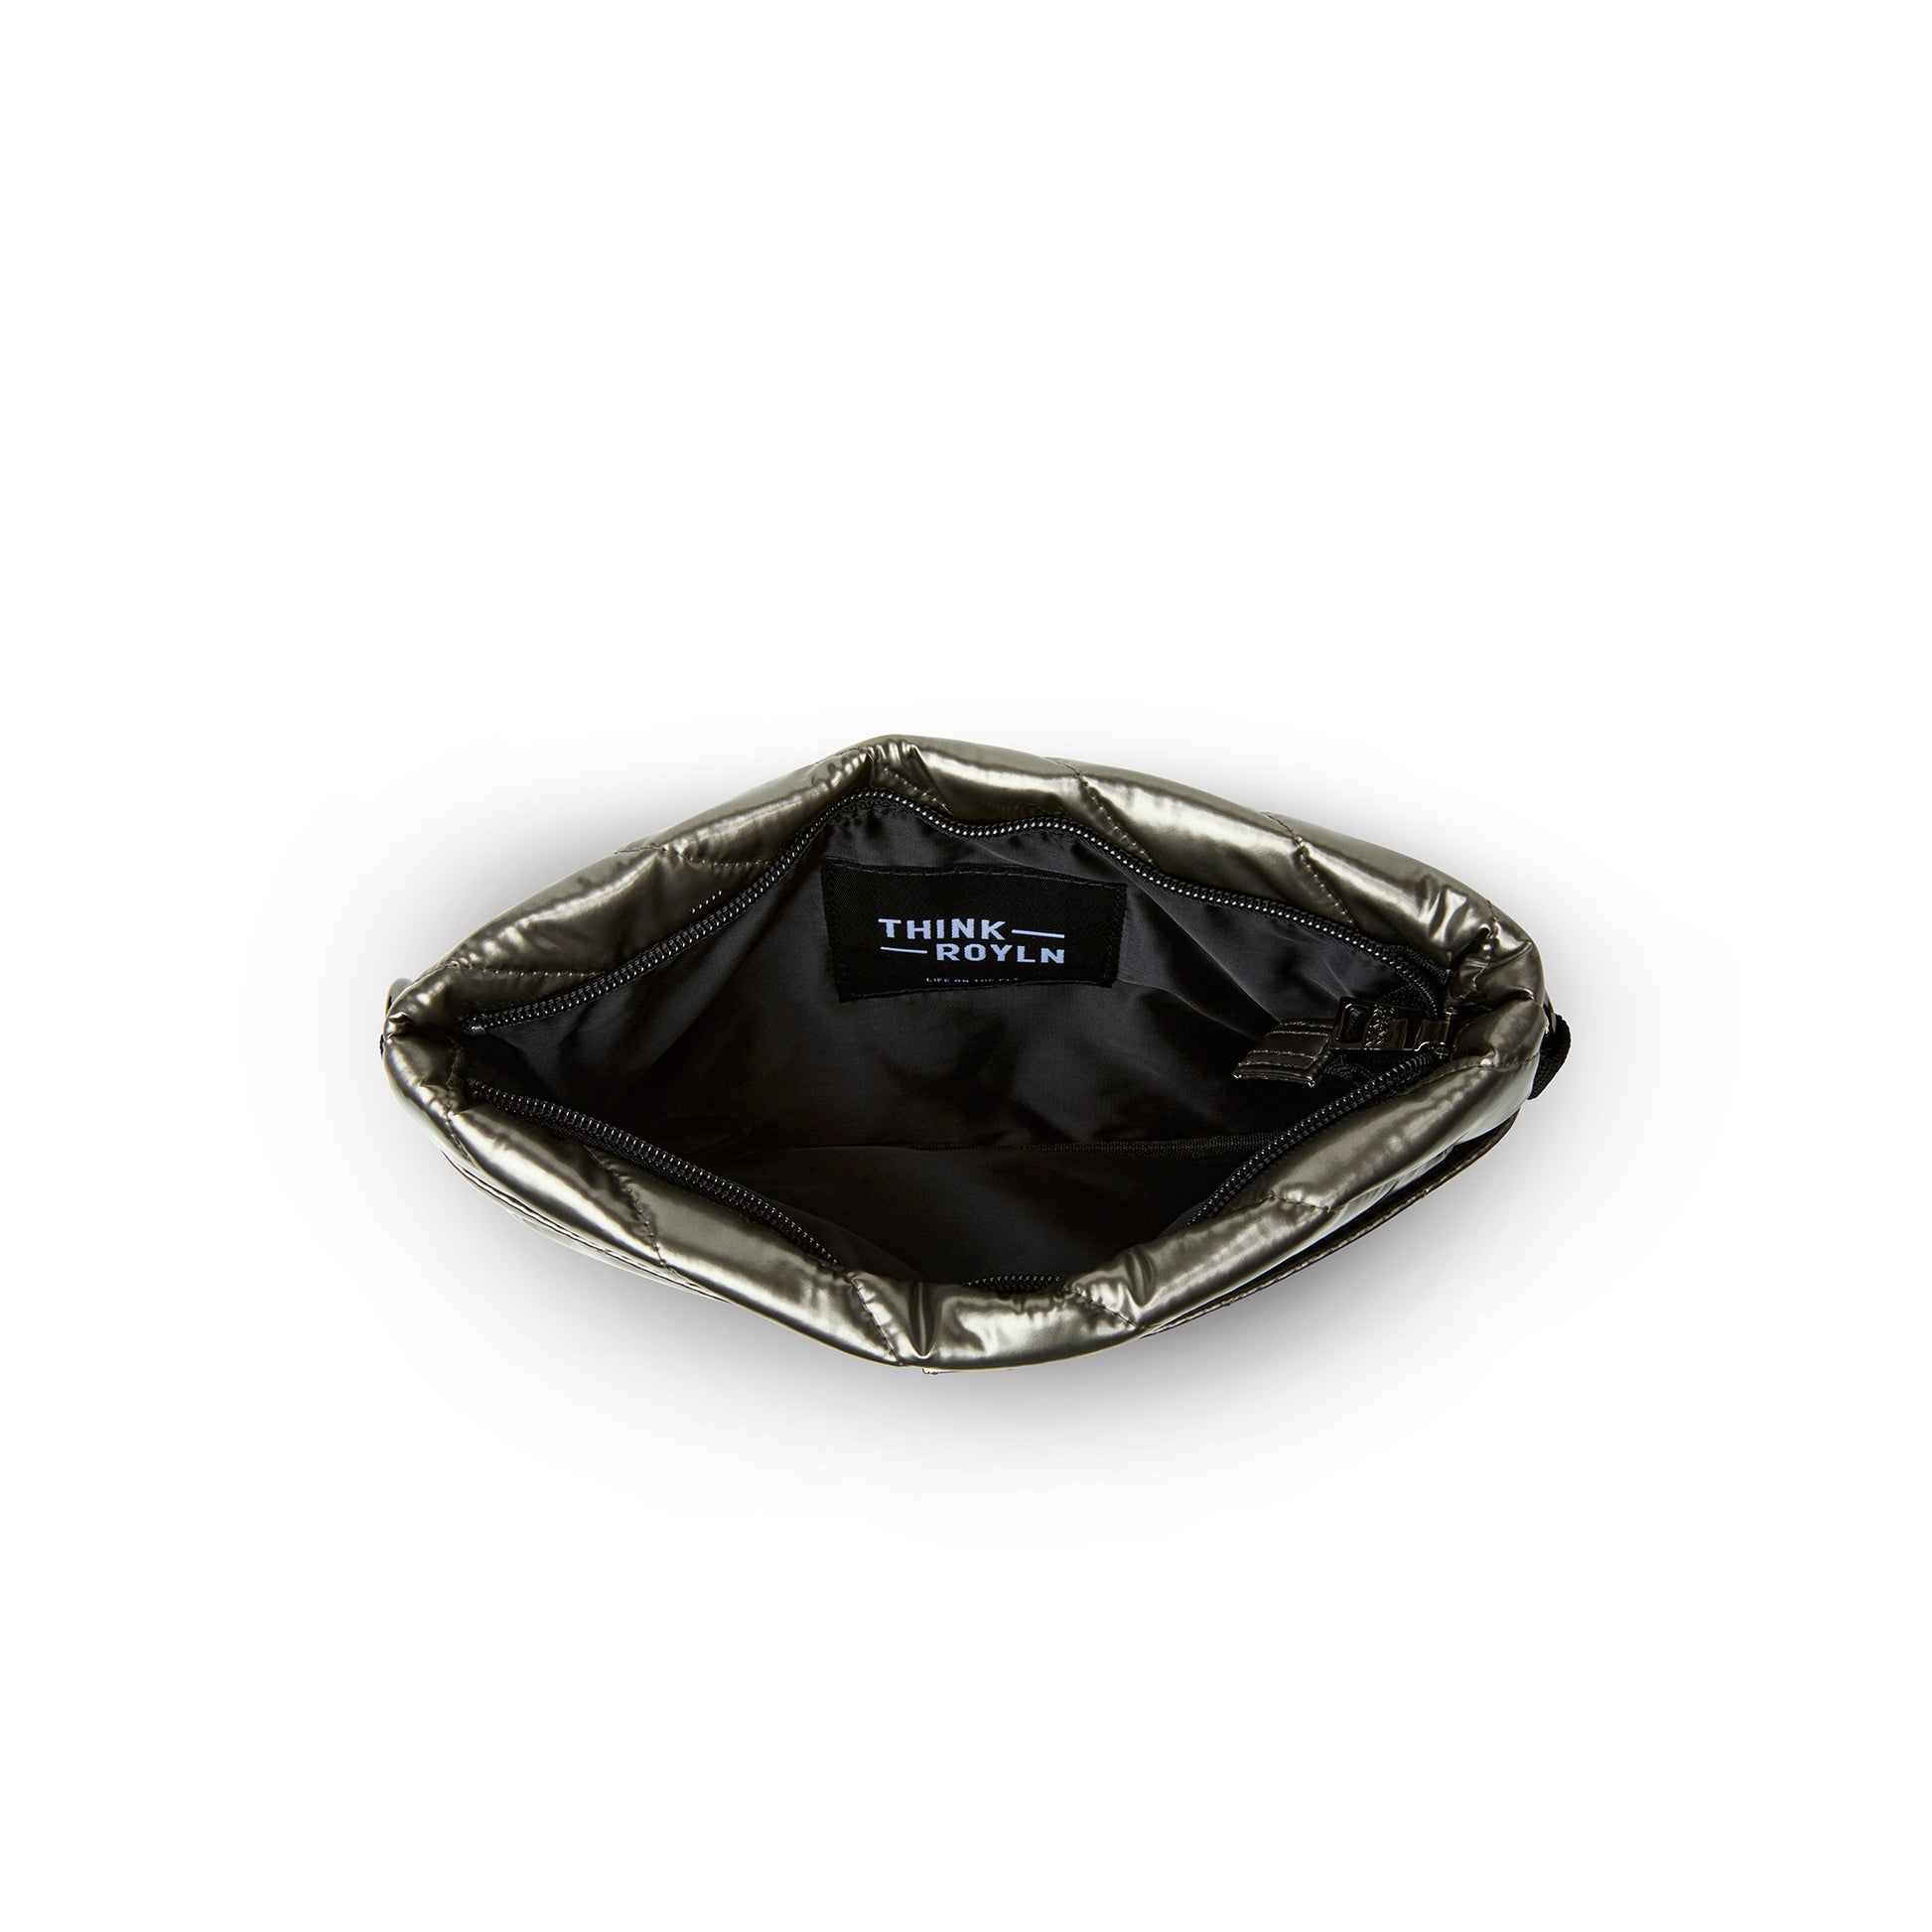 Quilted Covertible 'Diagonal Bum Bag 2.0' Waist/Crossbody Bag - Steel  Volterra – Maker + Muse